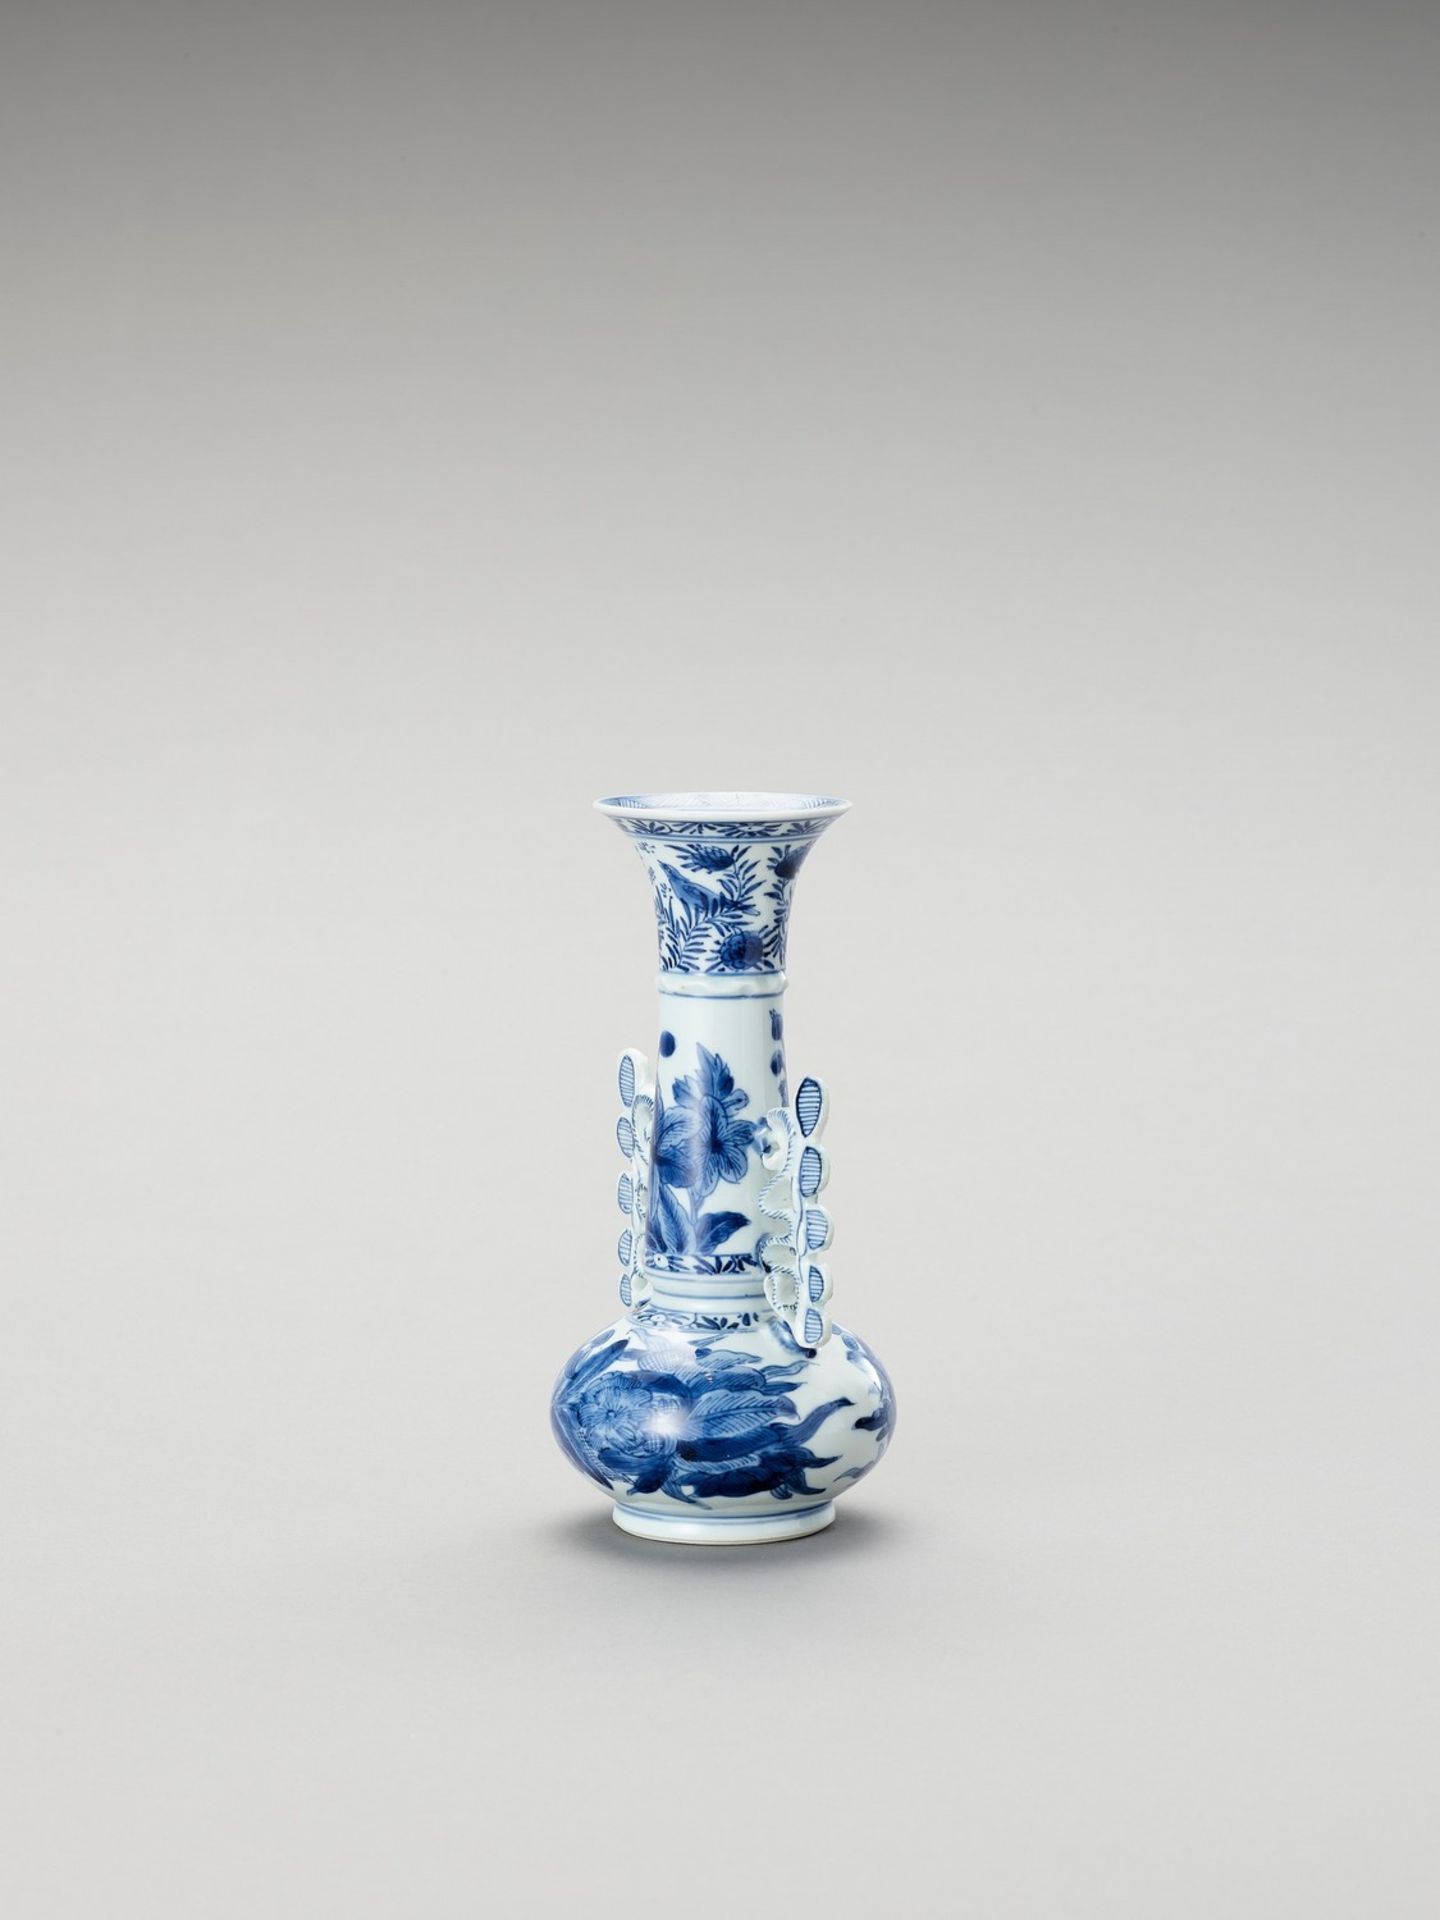 A BLUE AND WHITE PORCELAIN BOTTLE VASE - Image 2 of 6